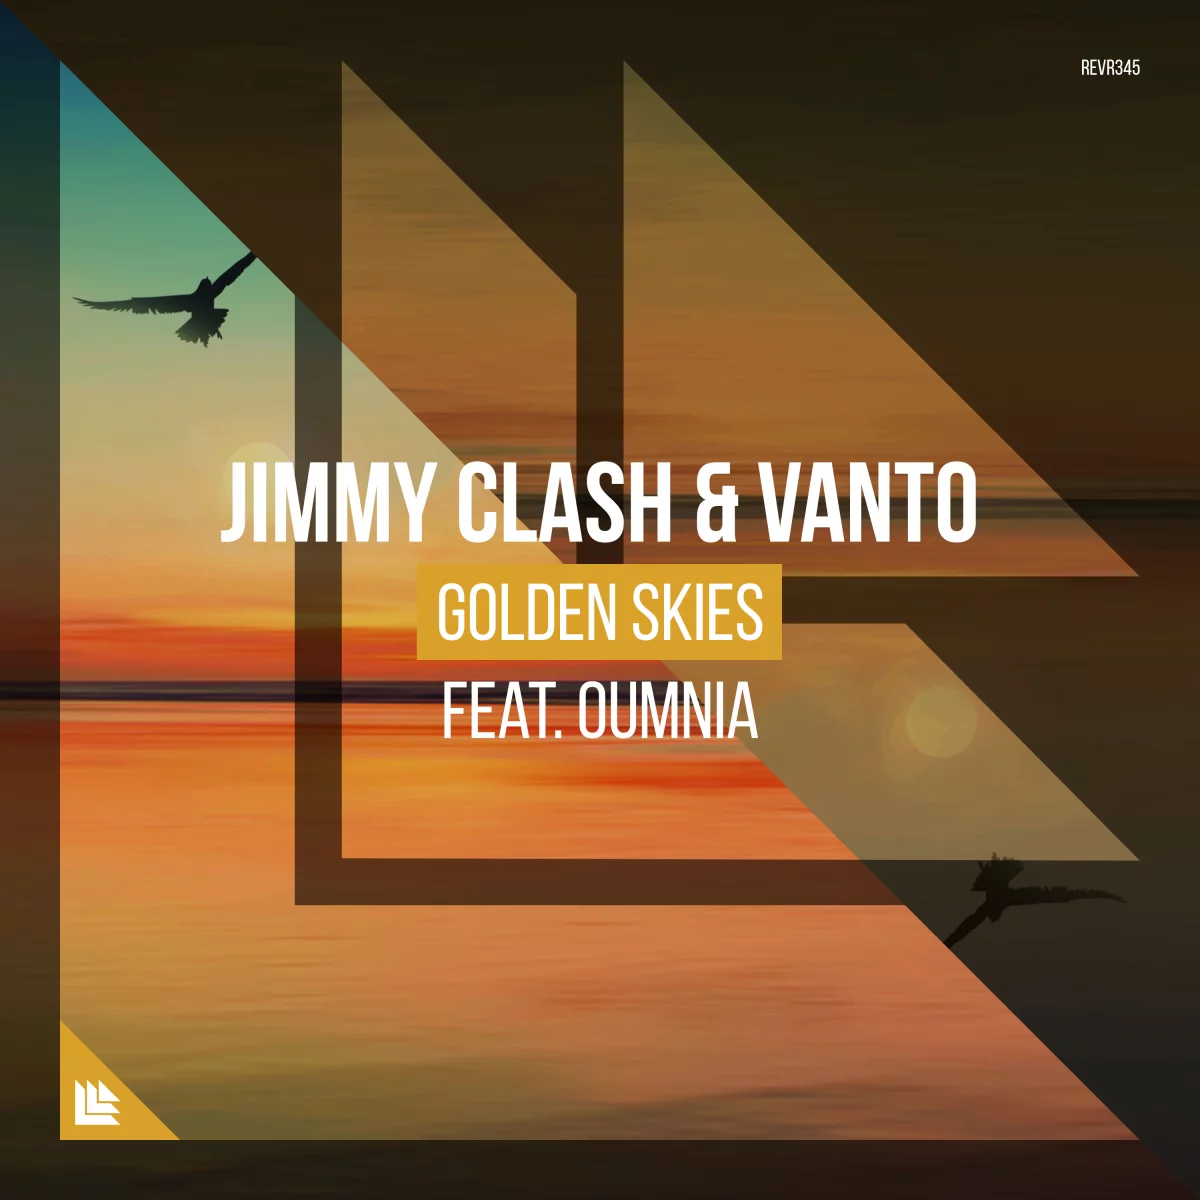 Golden Skies - Jimmy Clash⁠ & Vanto feat. Oumnia